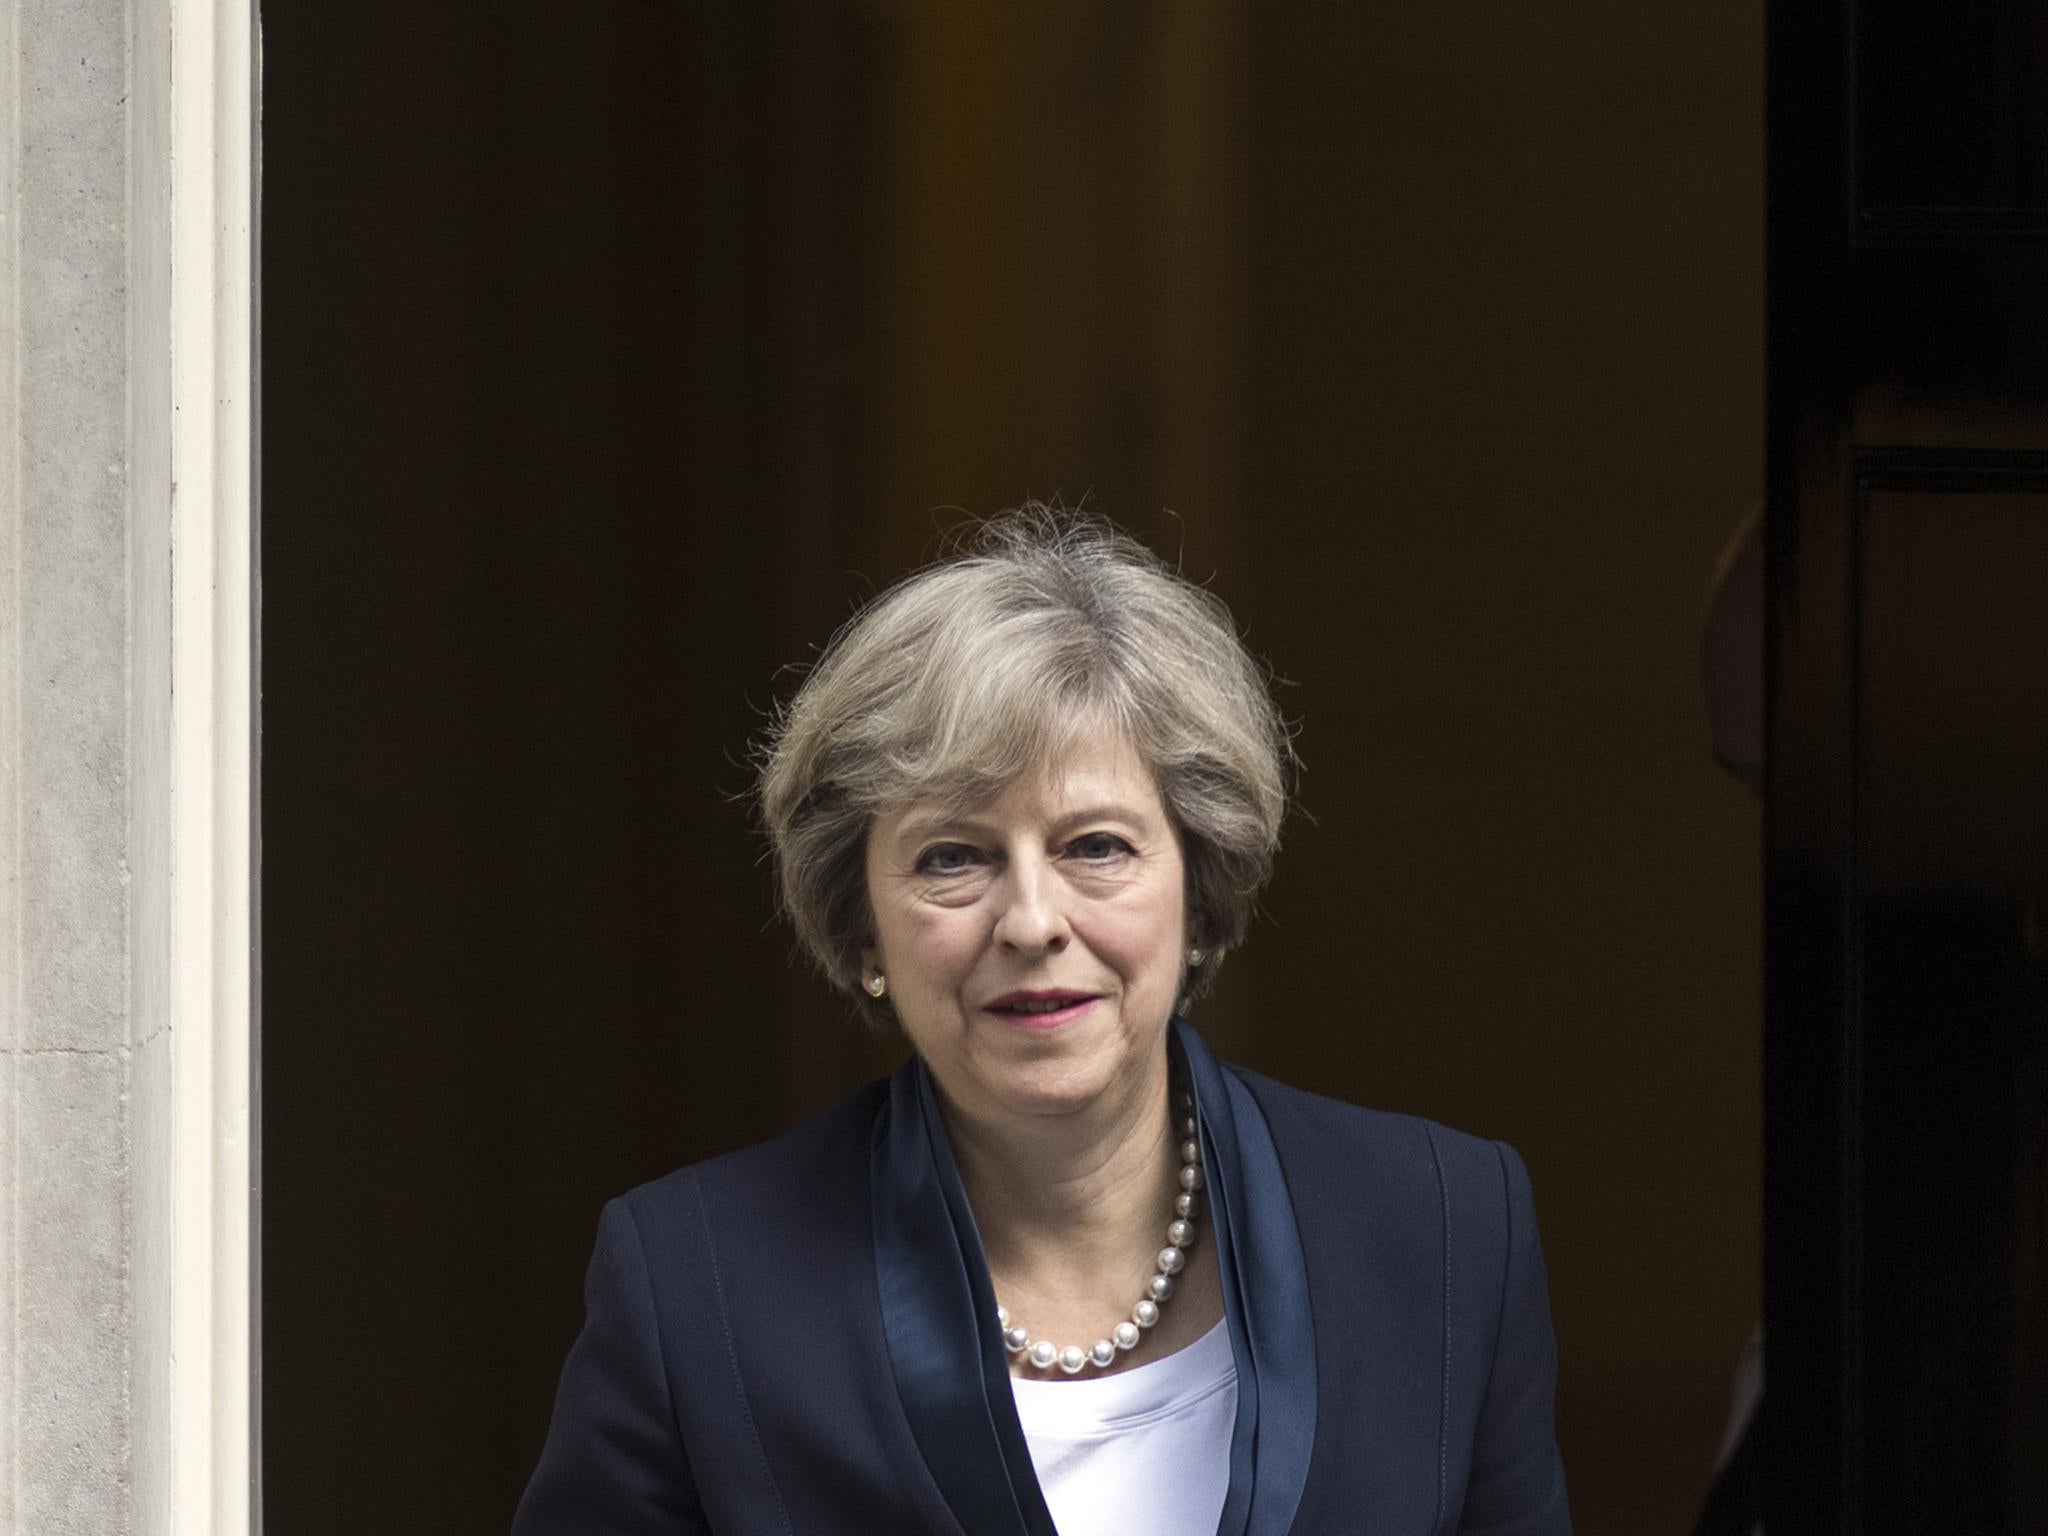 Figures suggest public lacks confidence in Brexit negotiations, despite the PM's attempts to reassure